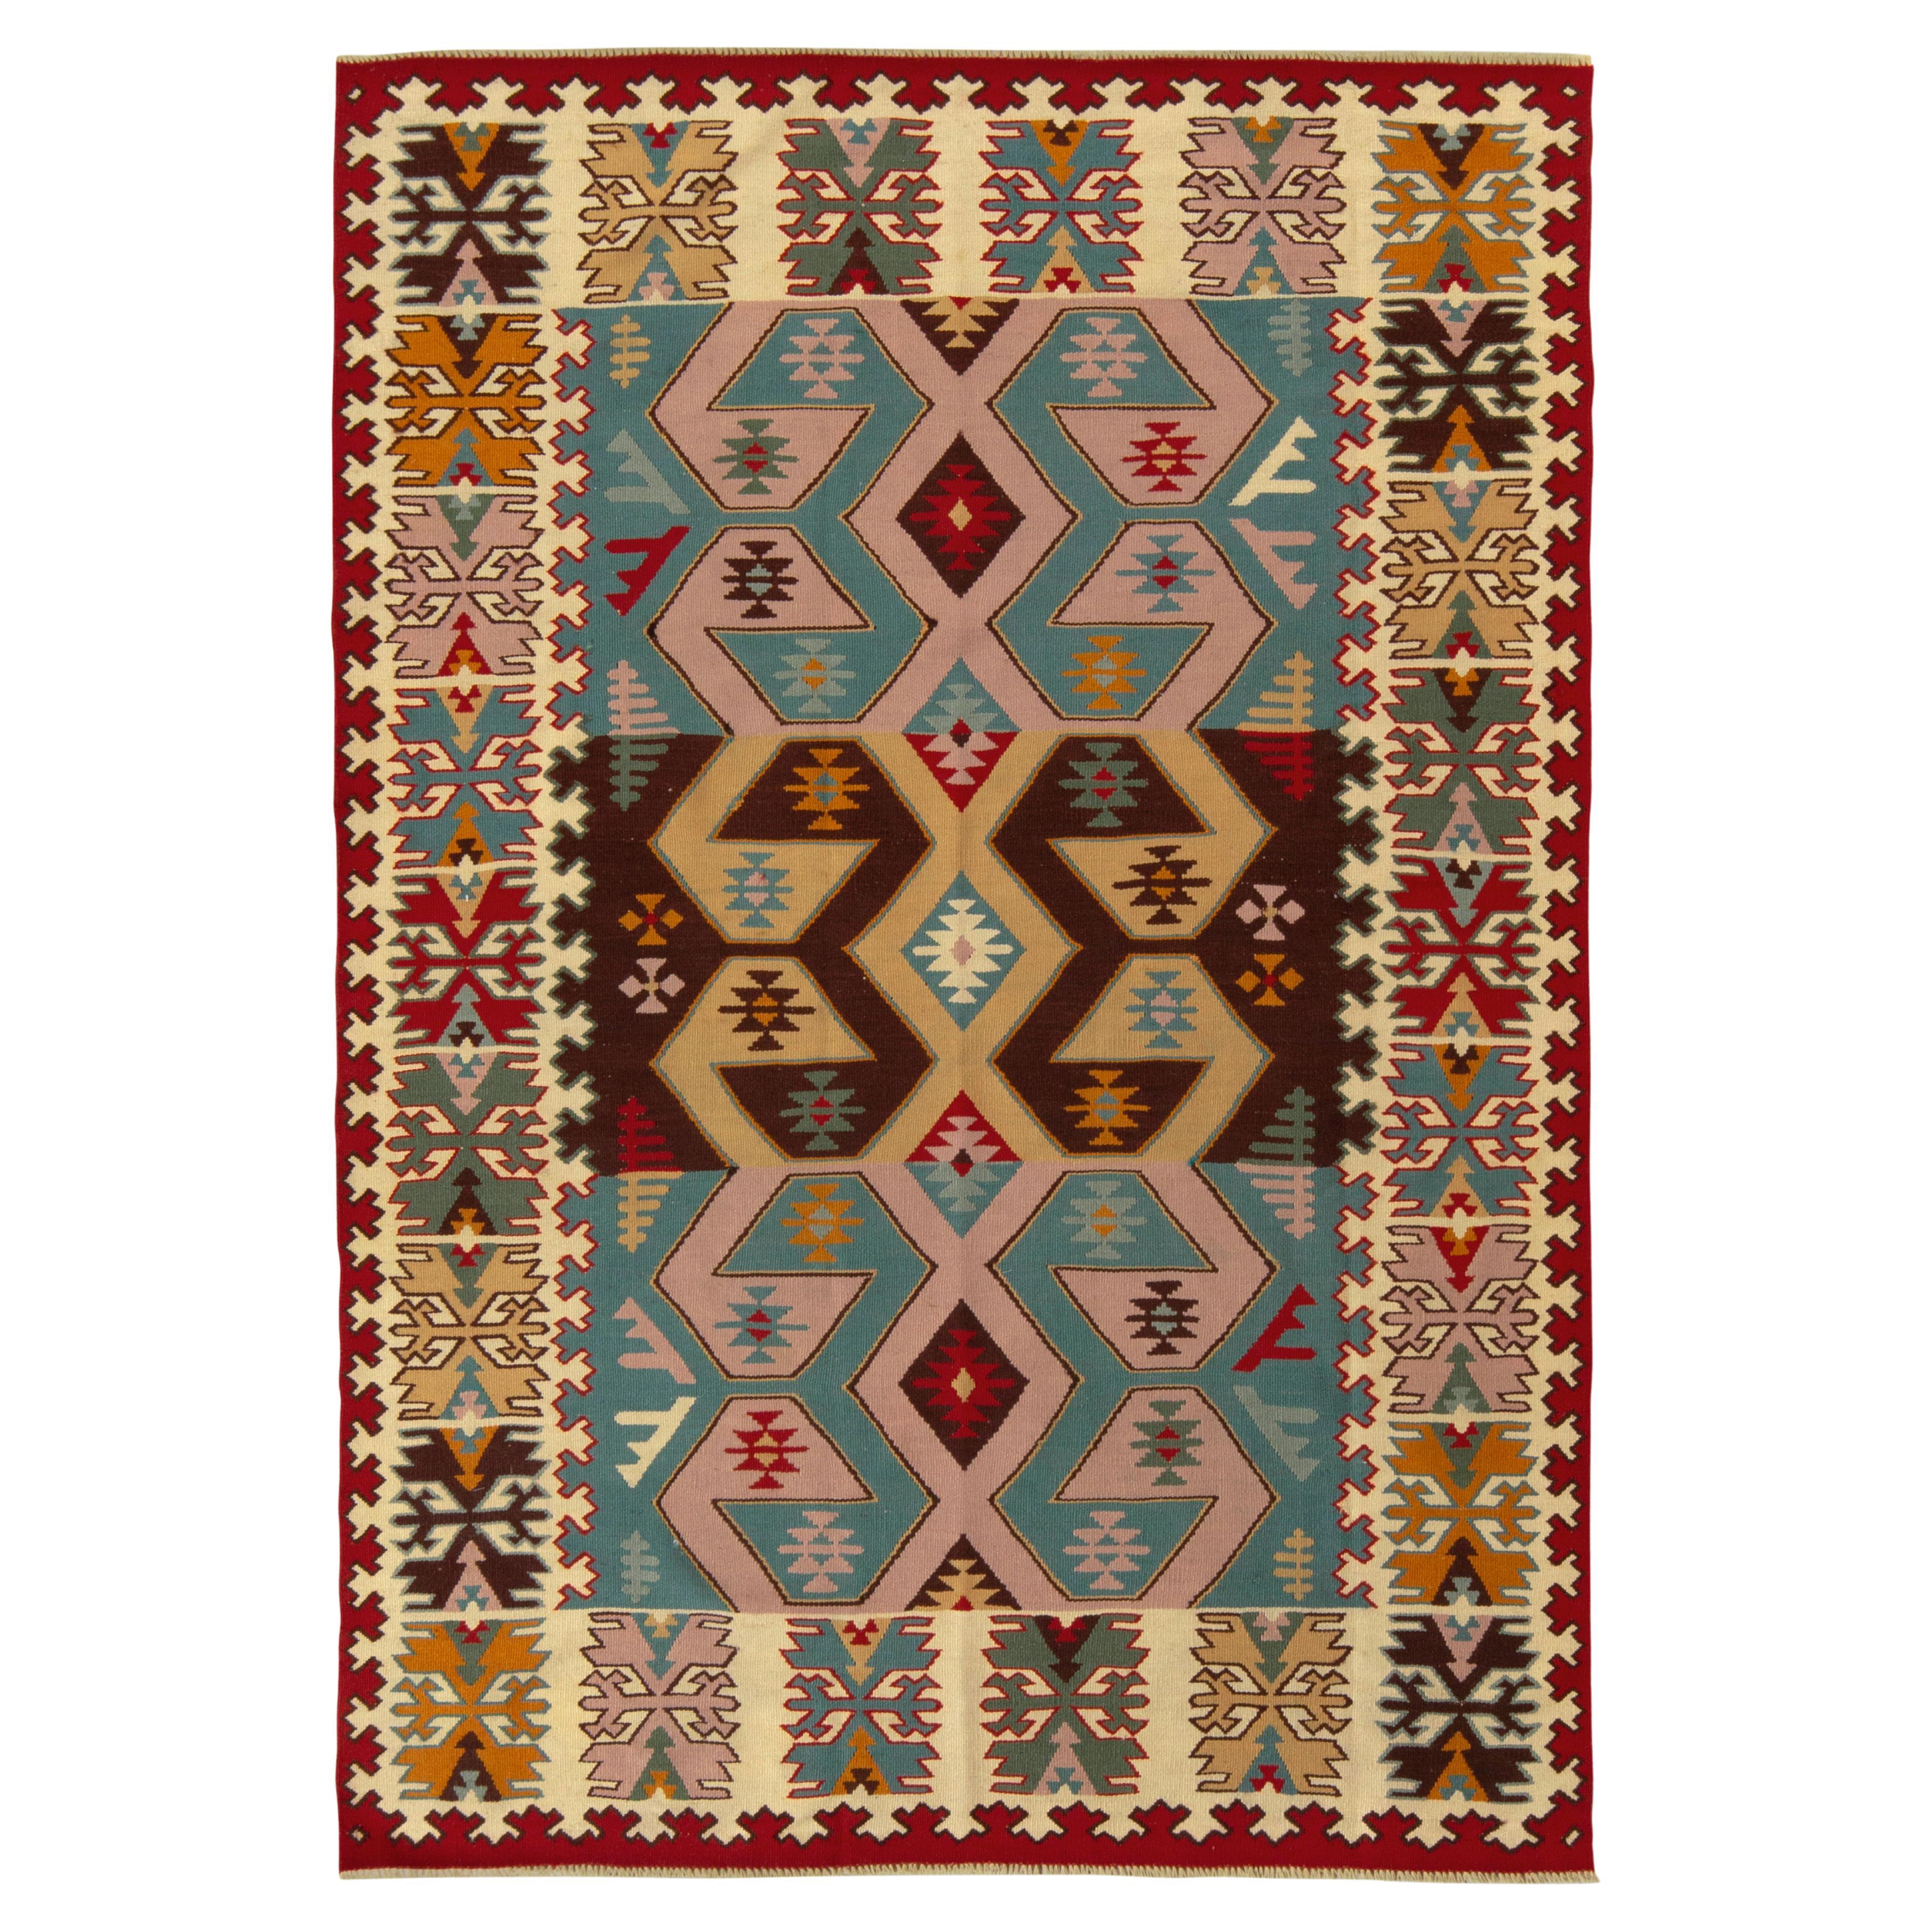 Vintage Turkish Kilim Rug in Multicolor, Tribal Geometric Pattern by Rug & Kilim For Sale